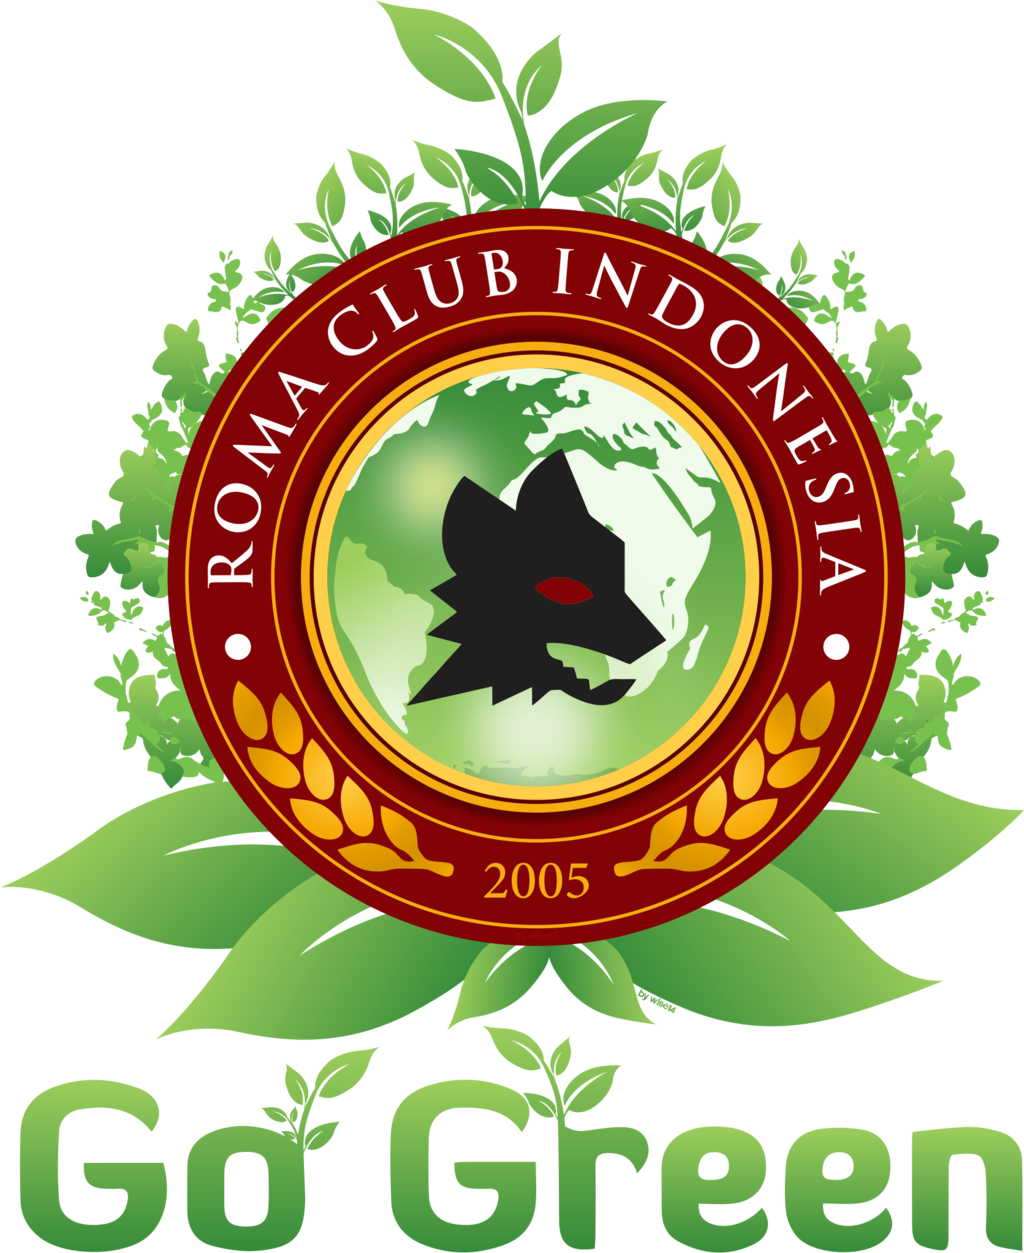 Roma Club Bandung